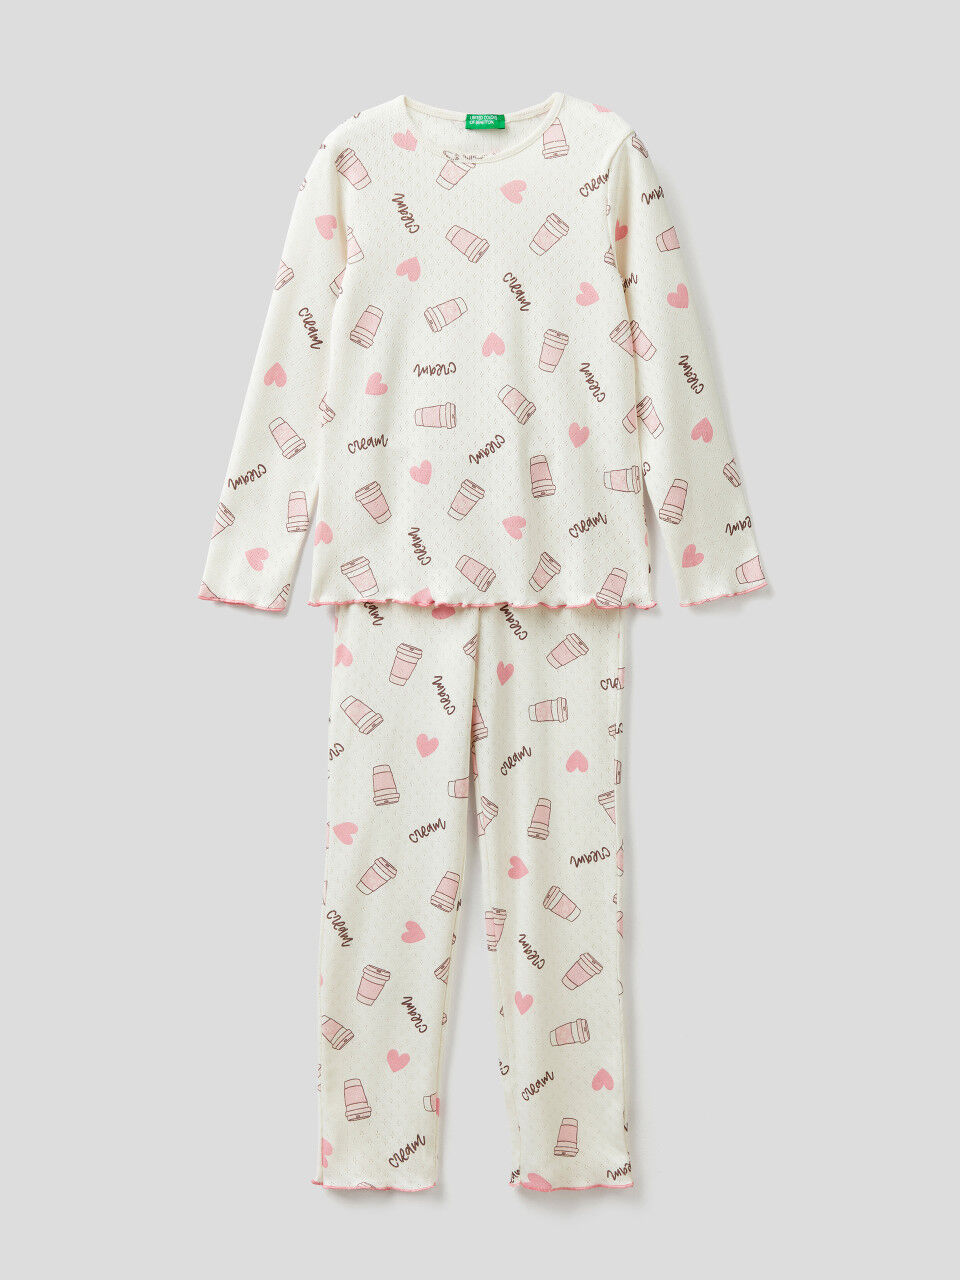 100% cotton patterned pyjamas